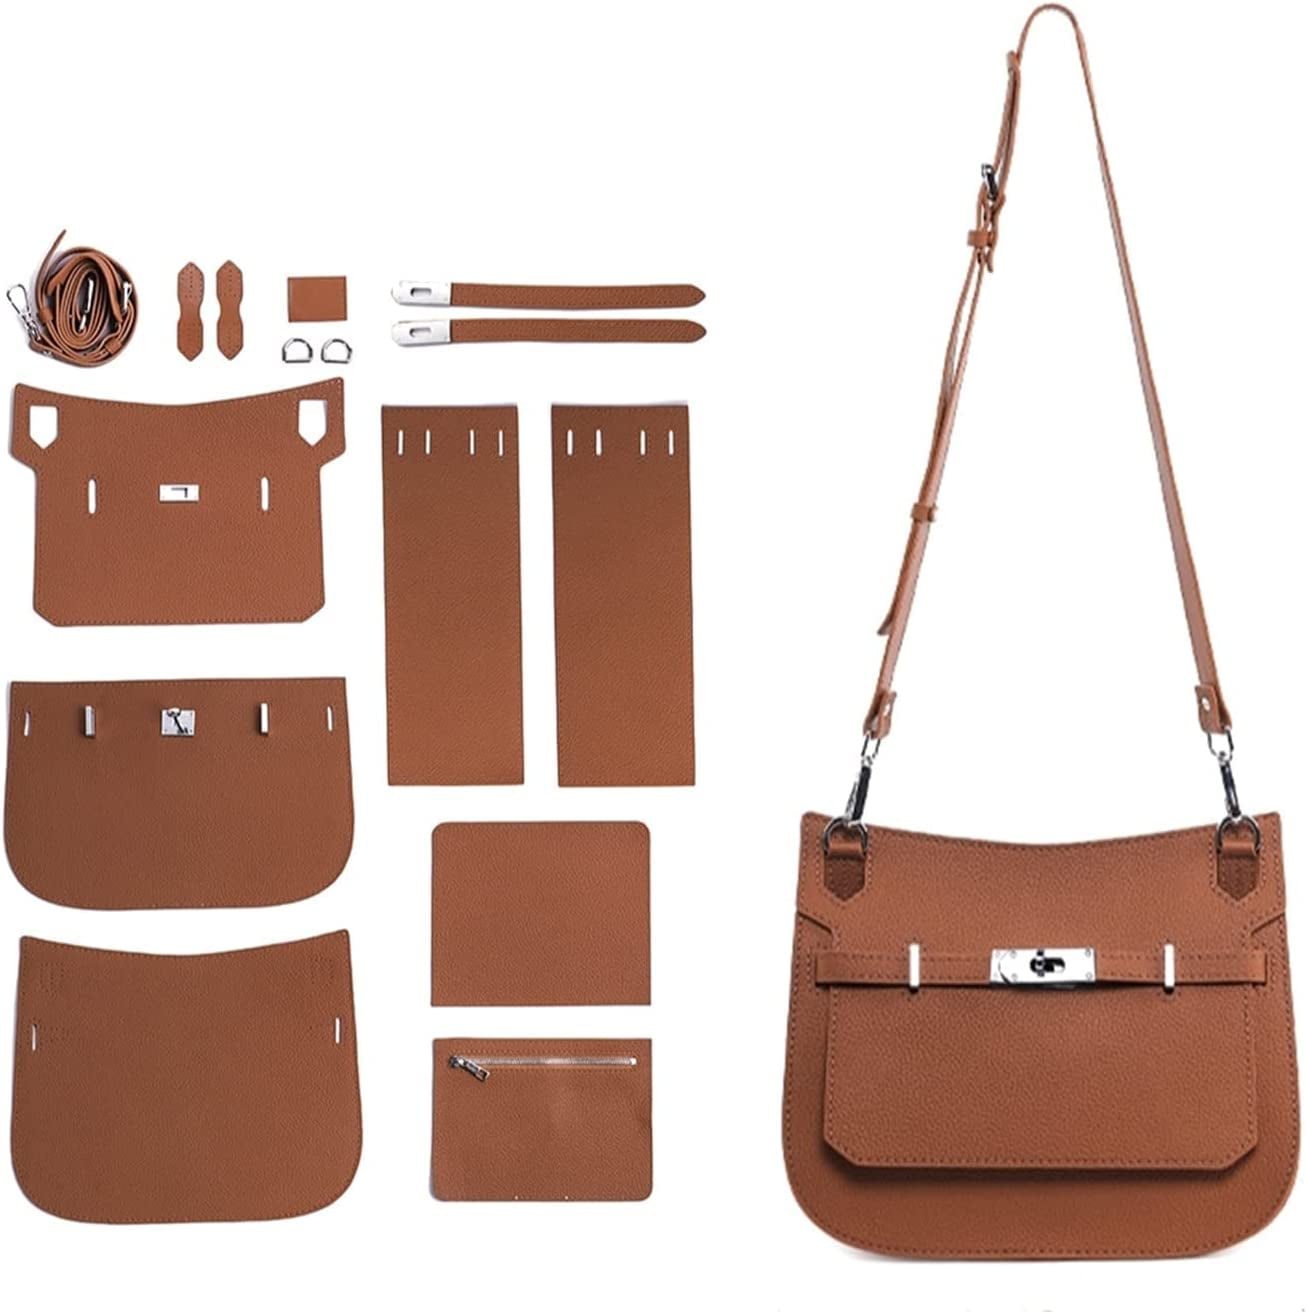 POPSEWING Top Grain Leather Inspired Lady Handbag DIY Kit